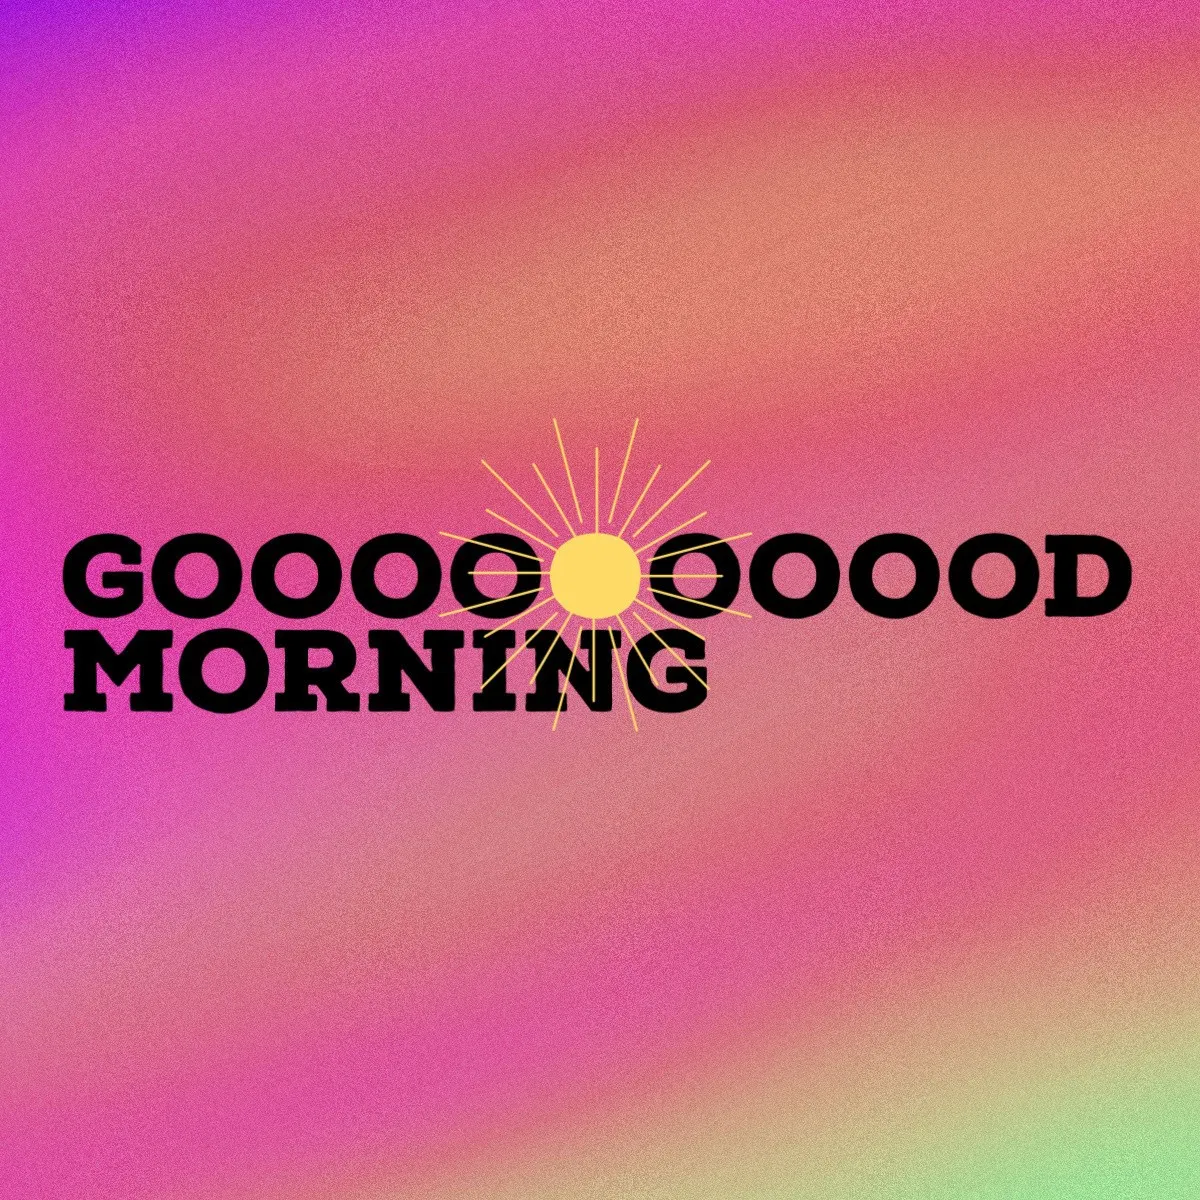 Send Good Morning Messages | Adobe Express